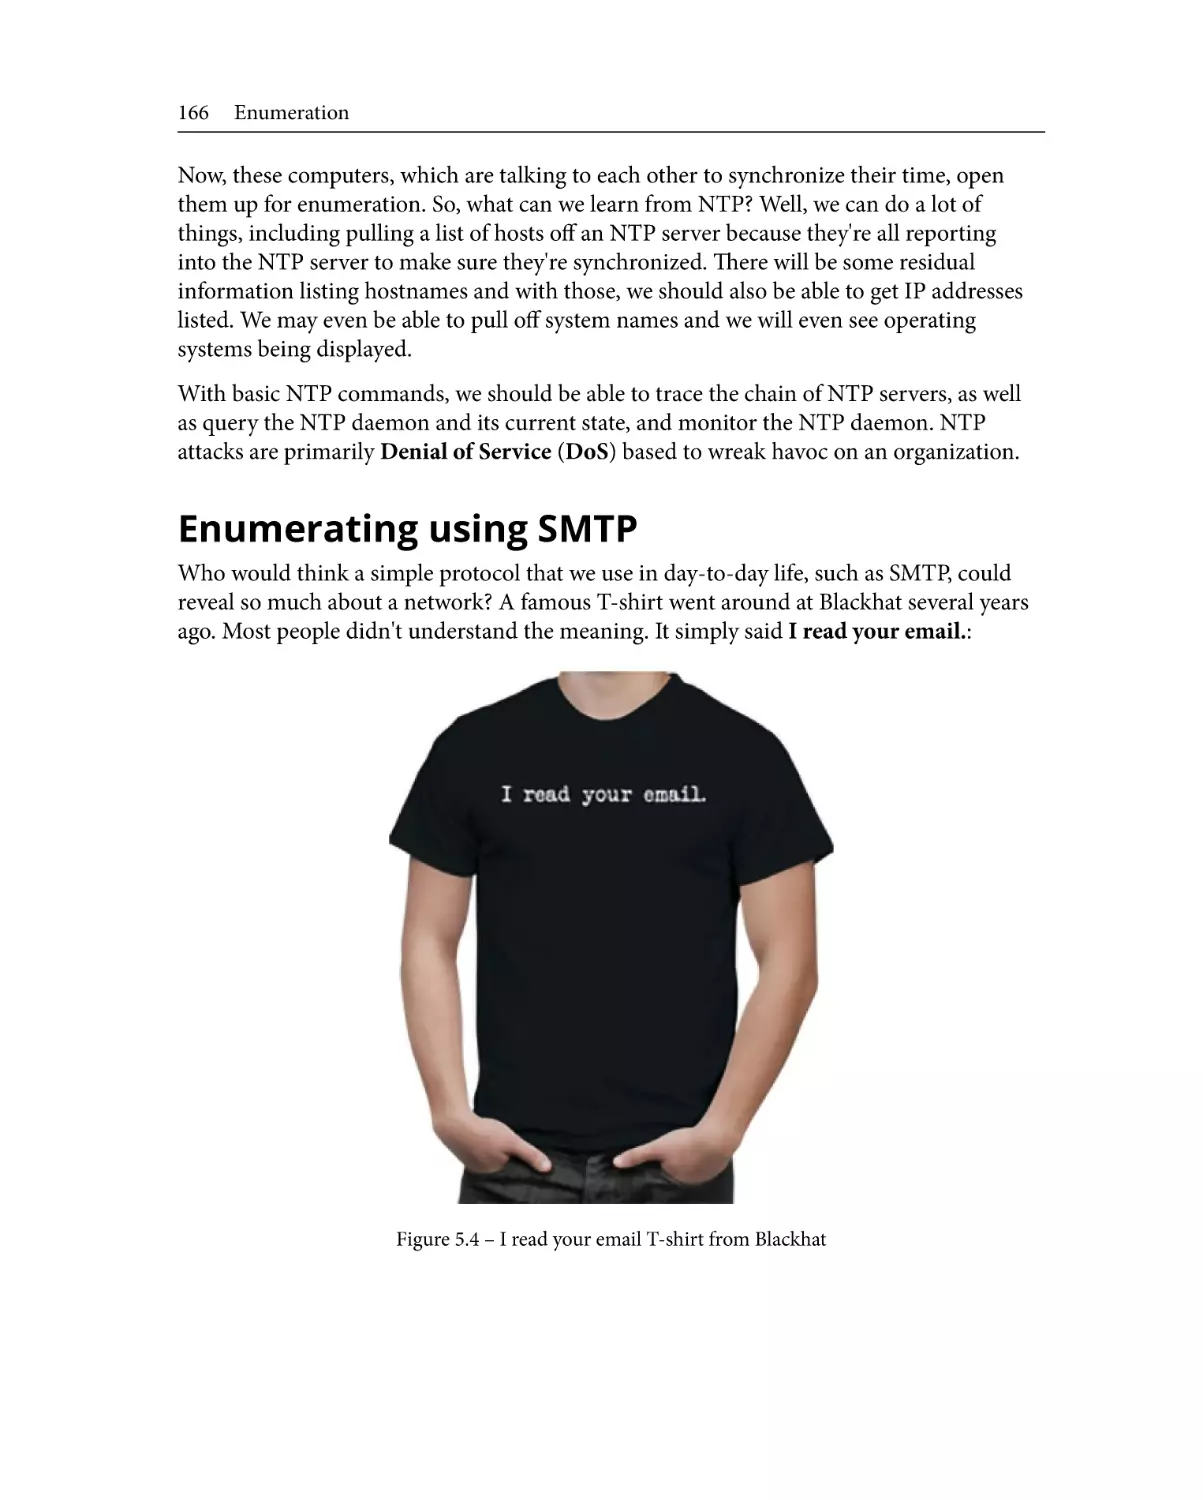 Enumerating using SMTP